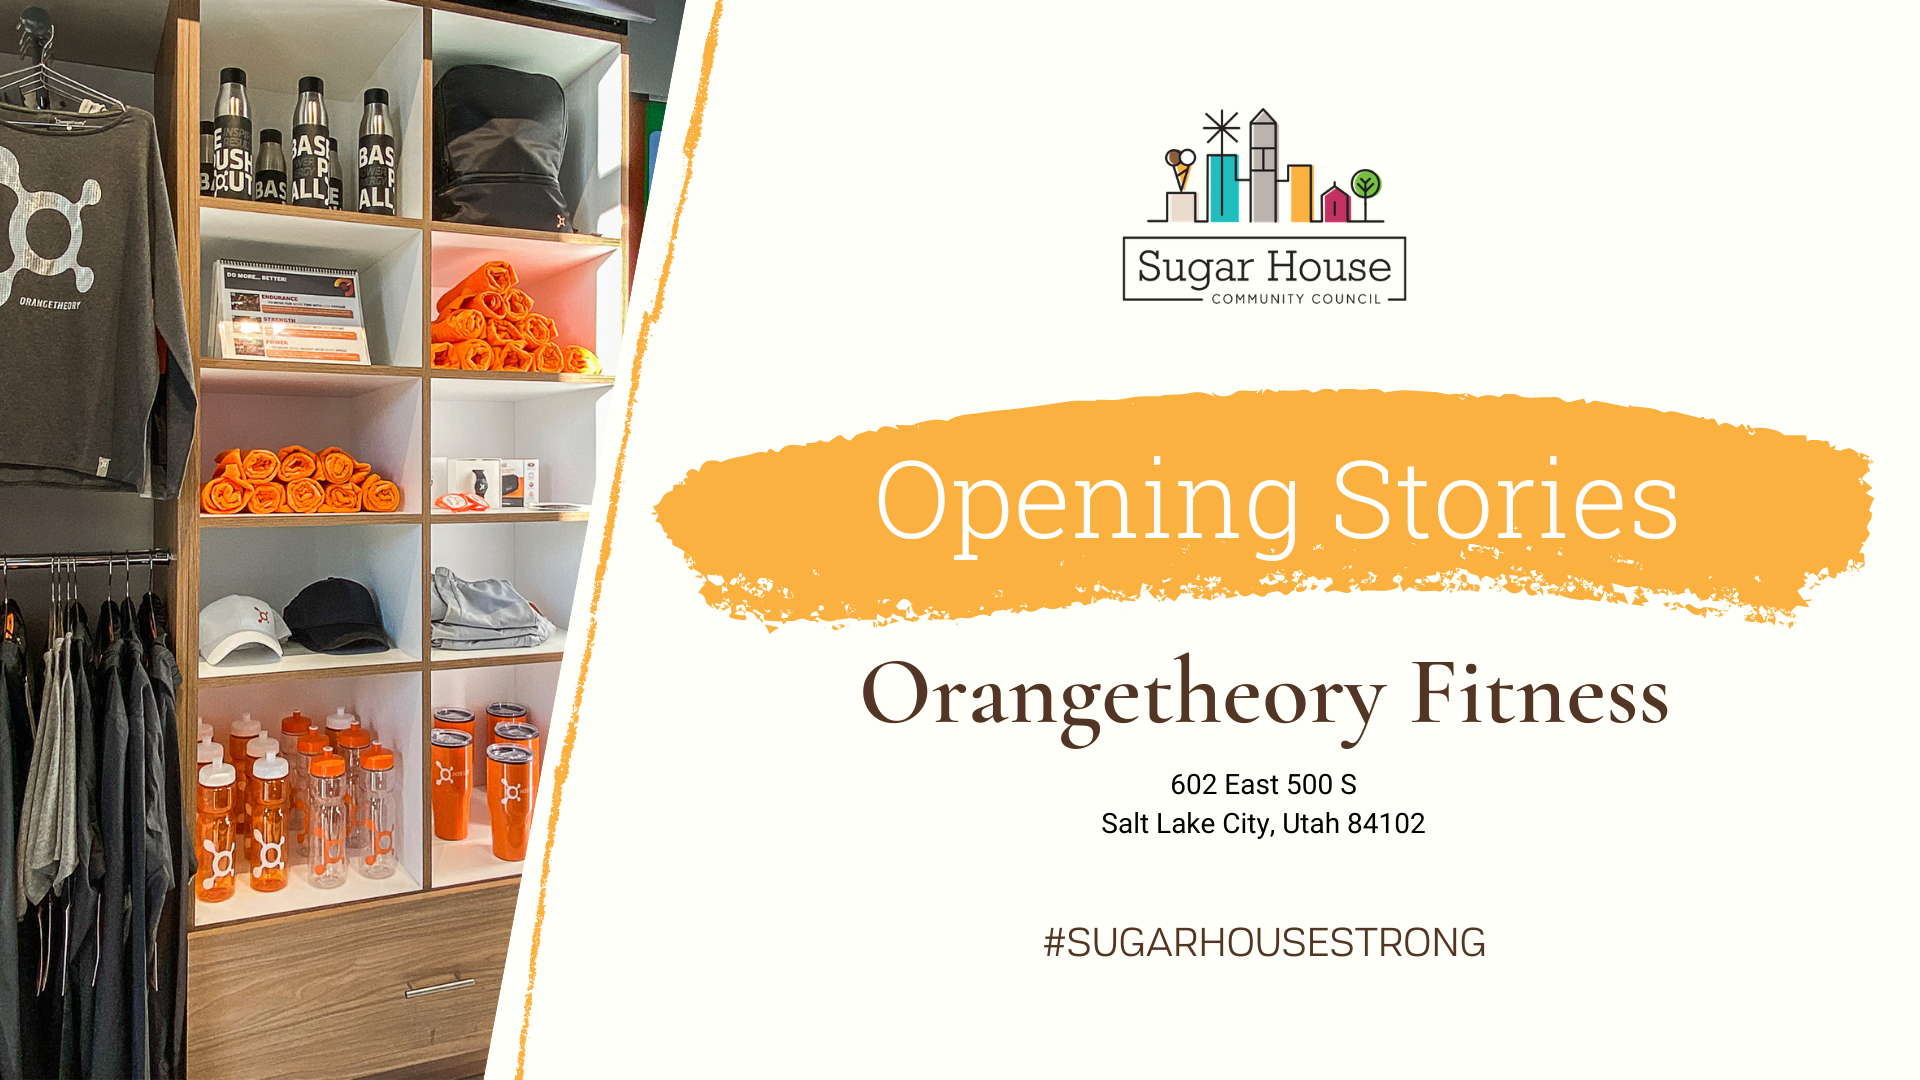 Sugar House Business: Orangetheory Fitness - Sugar House Community Council  Welcomes You